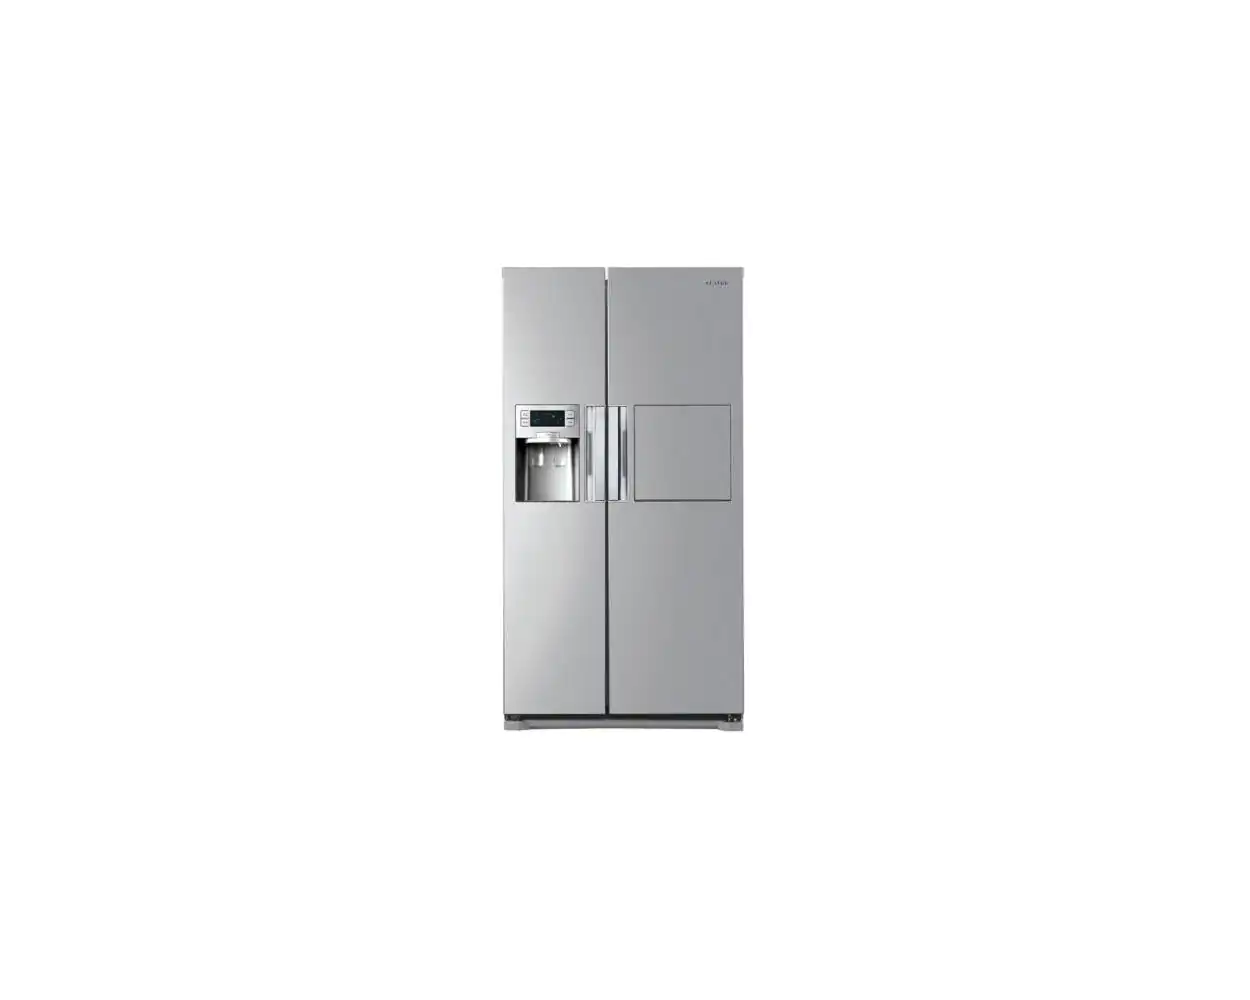 Samsung refrigerator side by side 623 ltr Price At Kara Nigeria Store.